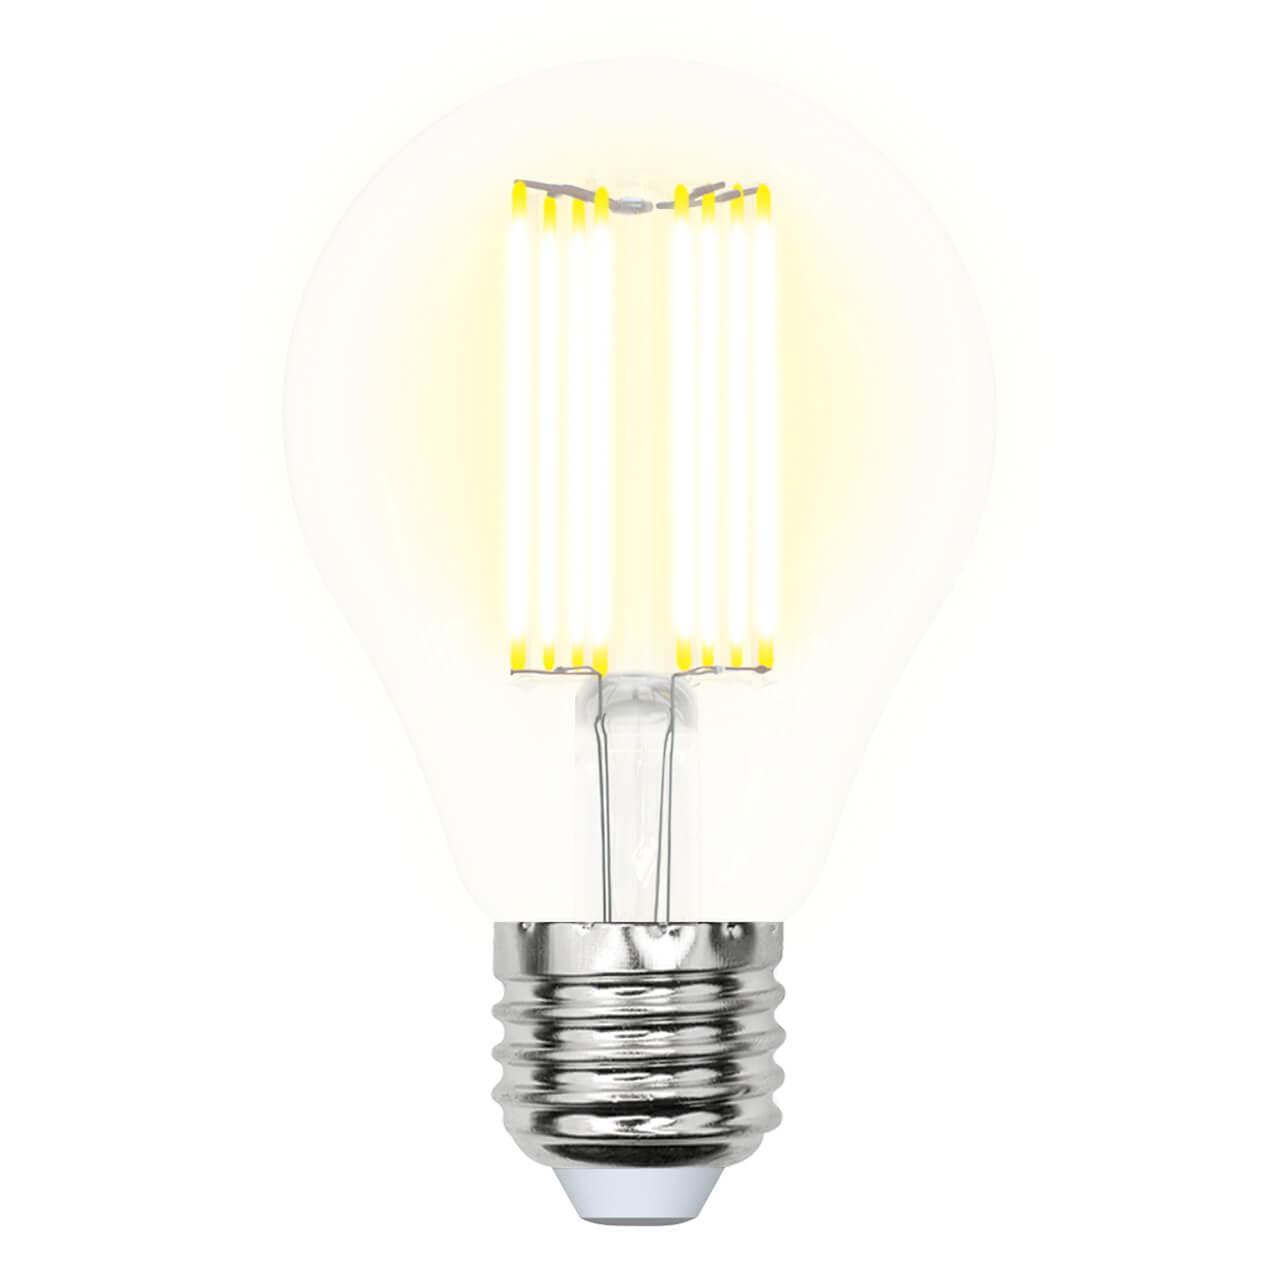 Лампа светодиодная филаментная E27 23W 3000K прозрачная LED-A70-23W/3000K/E27/CL PLS02WH UL-00005897